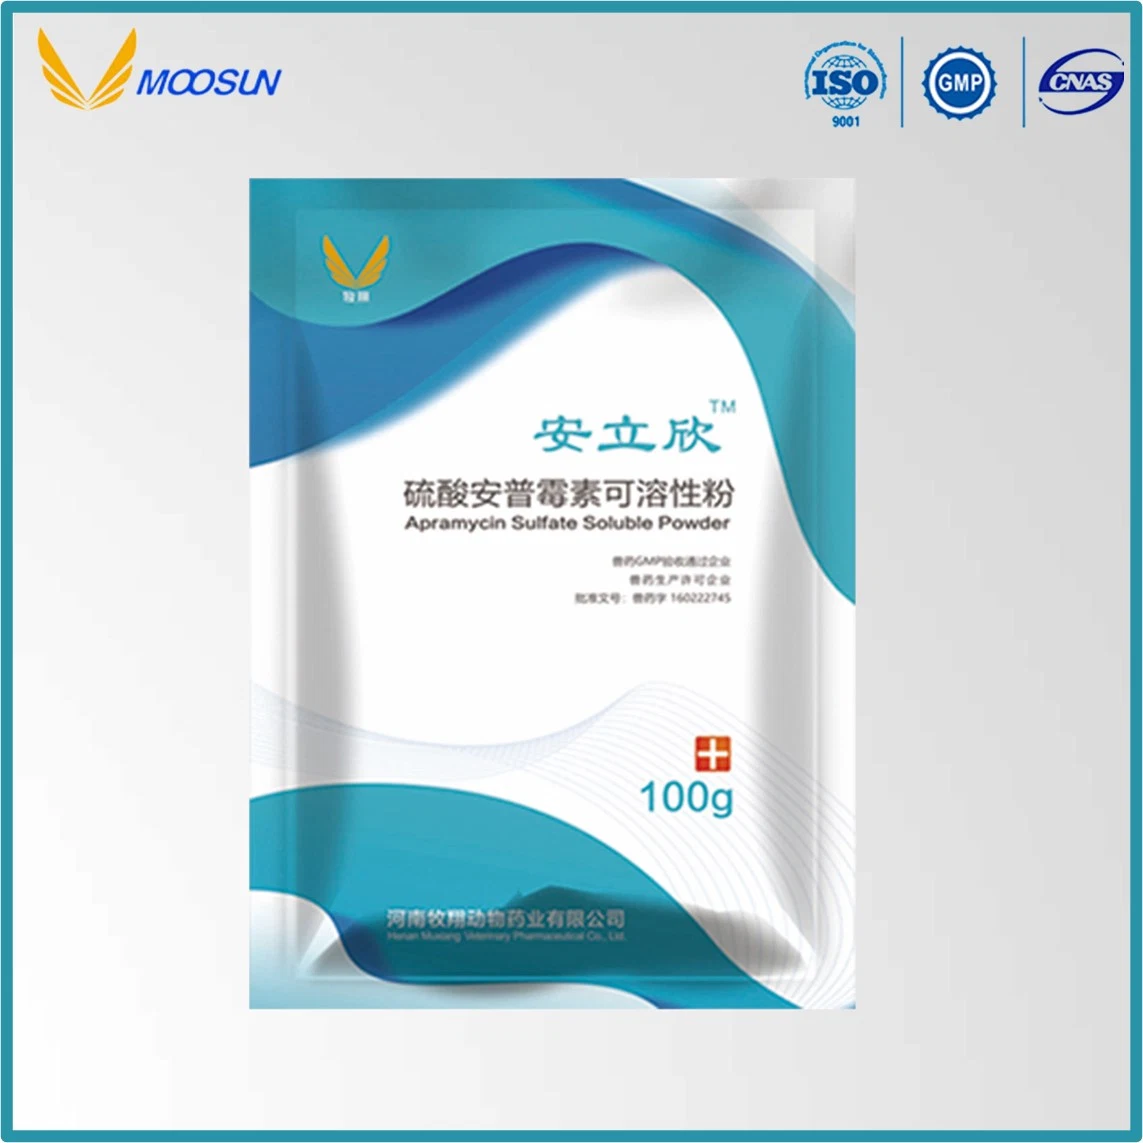 Veterinary Medicine Apramycin Sulfate Soluble Powder with GMP